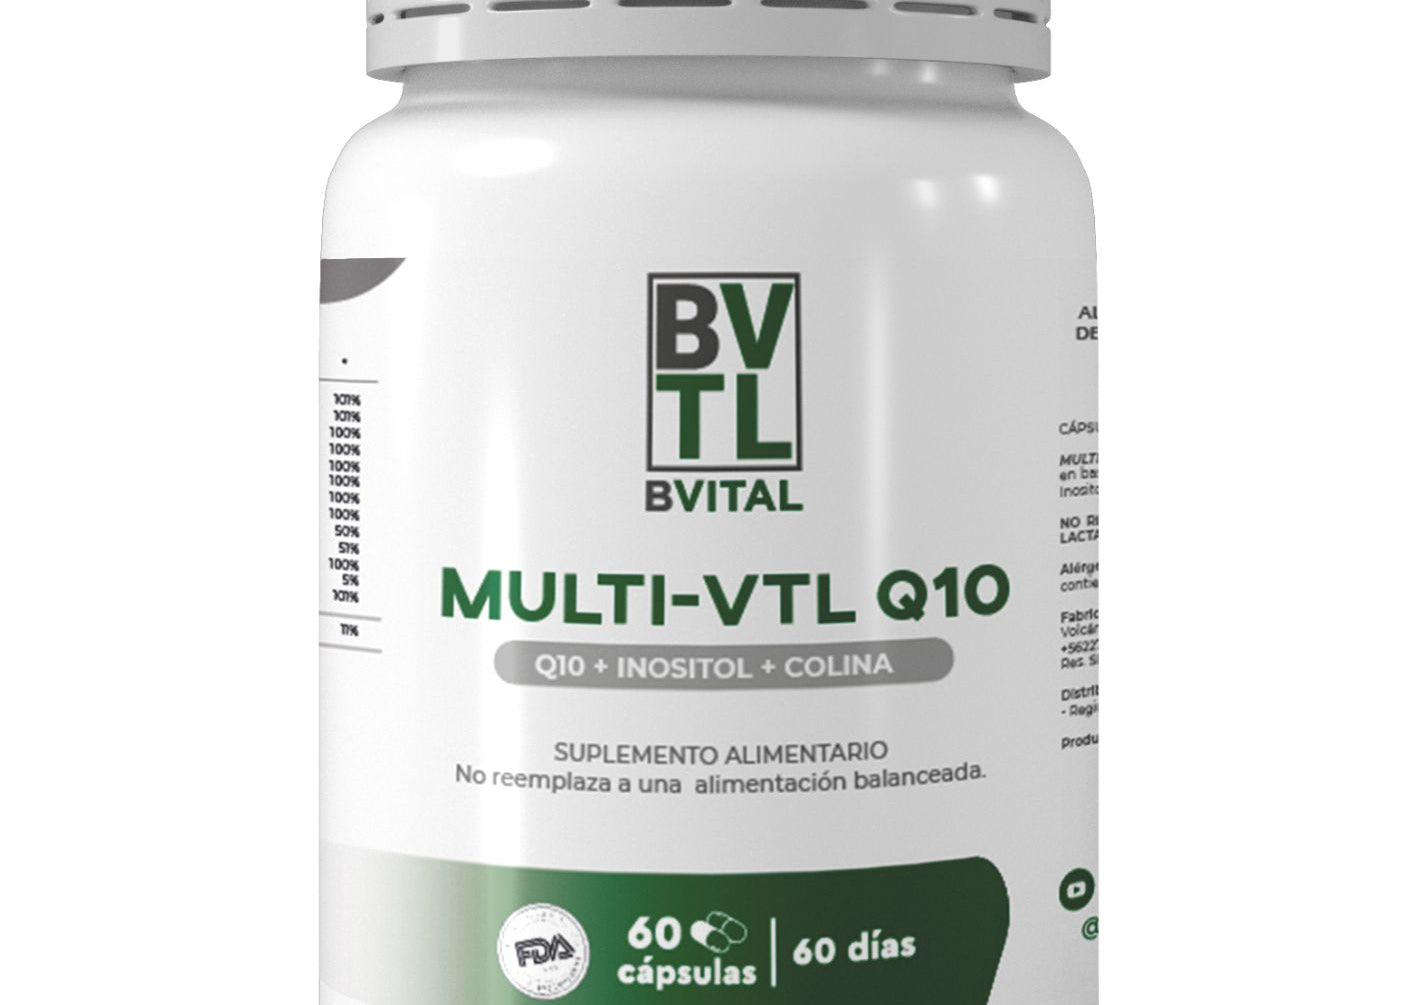 MULTI-VTL Q10